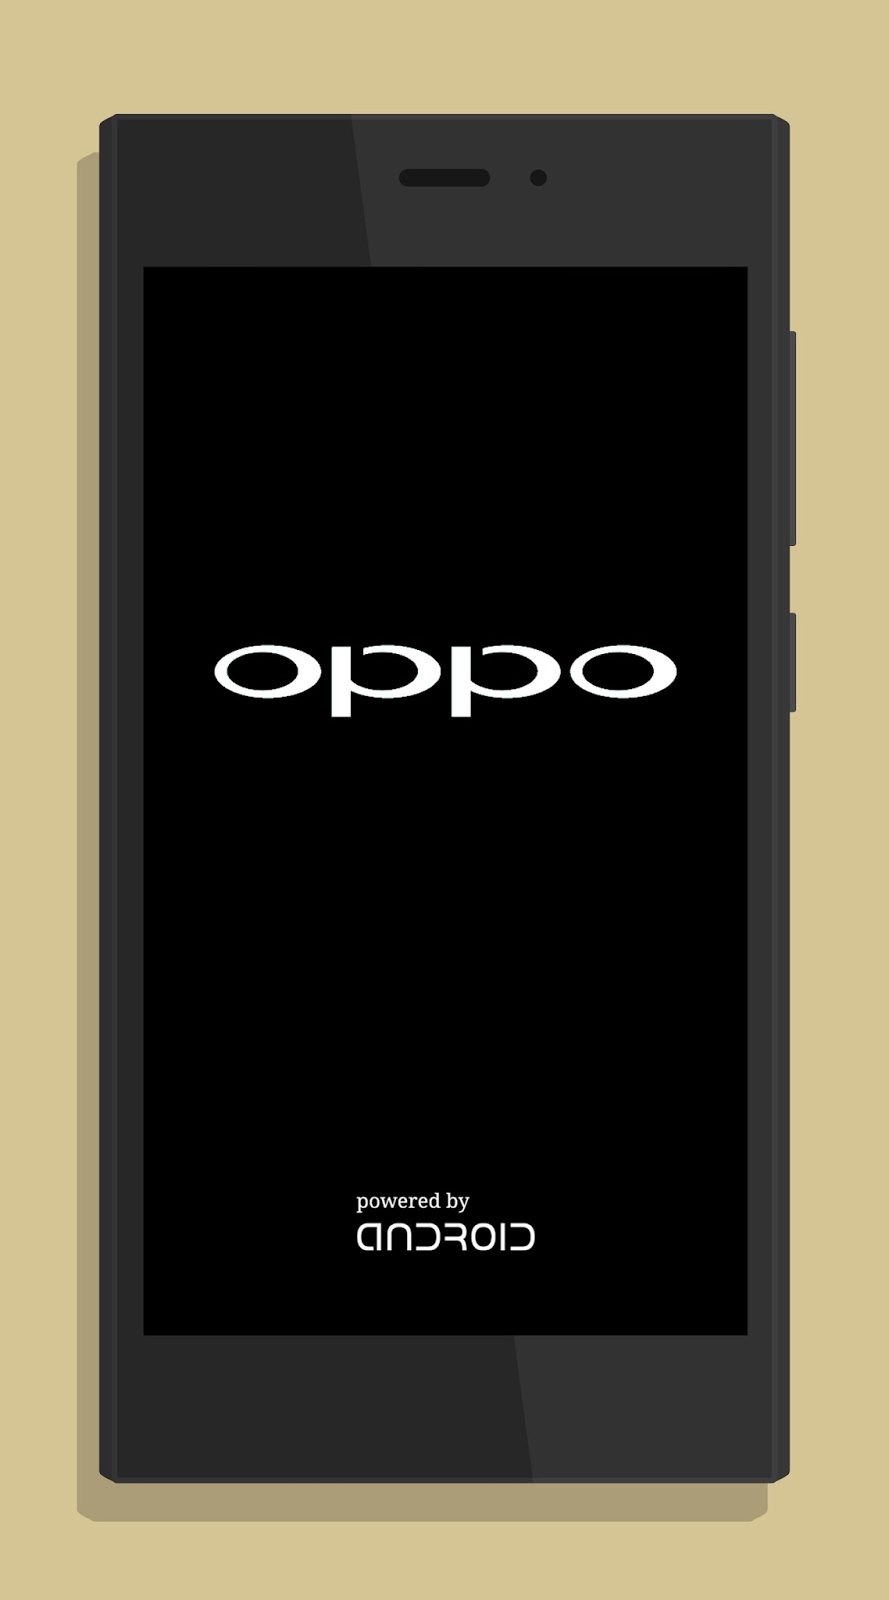 wallpaper lenovo a6000,black,mobile phone,gadget,text,product